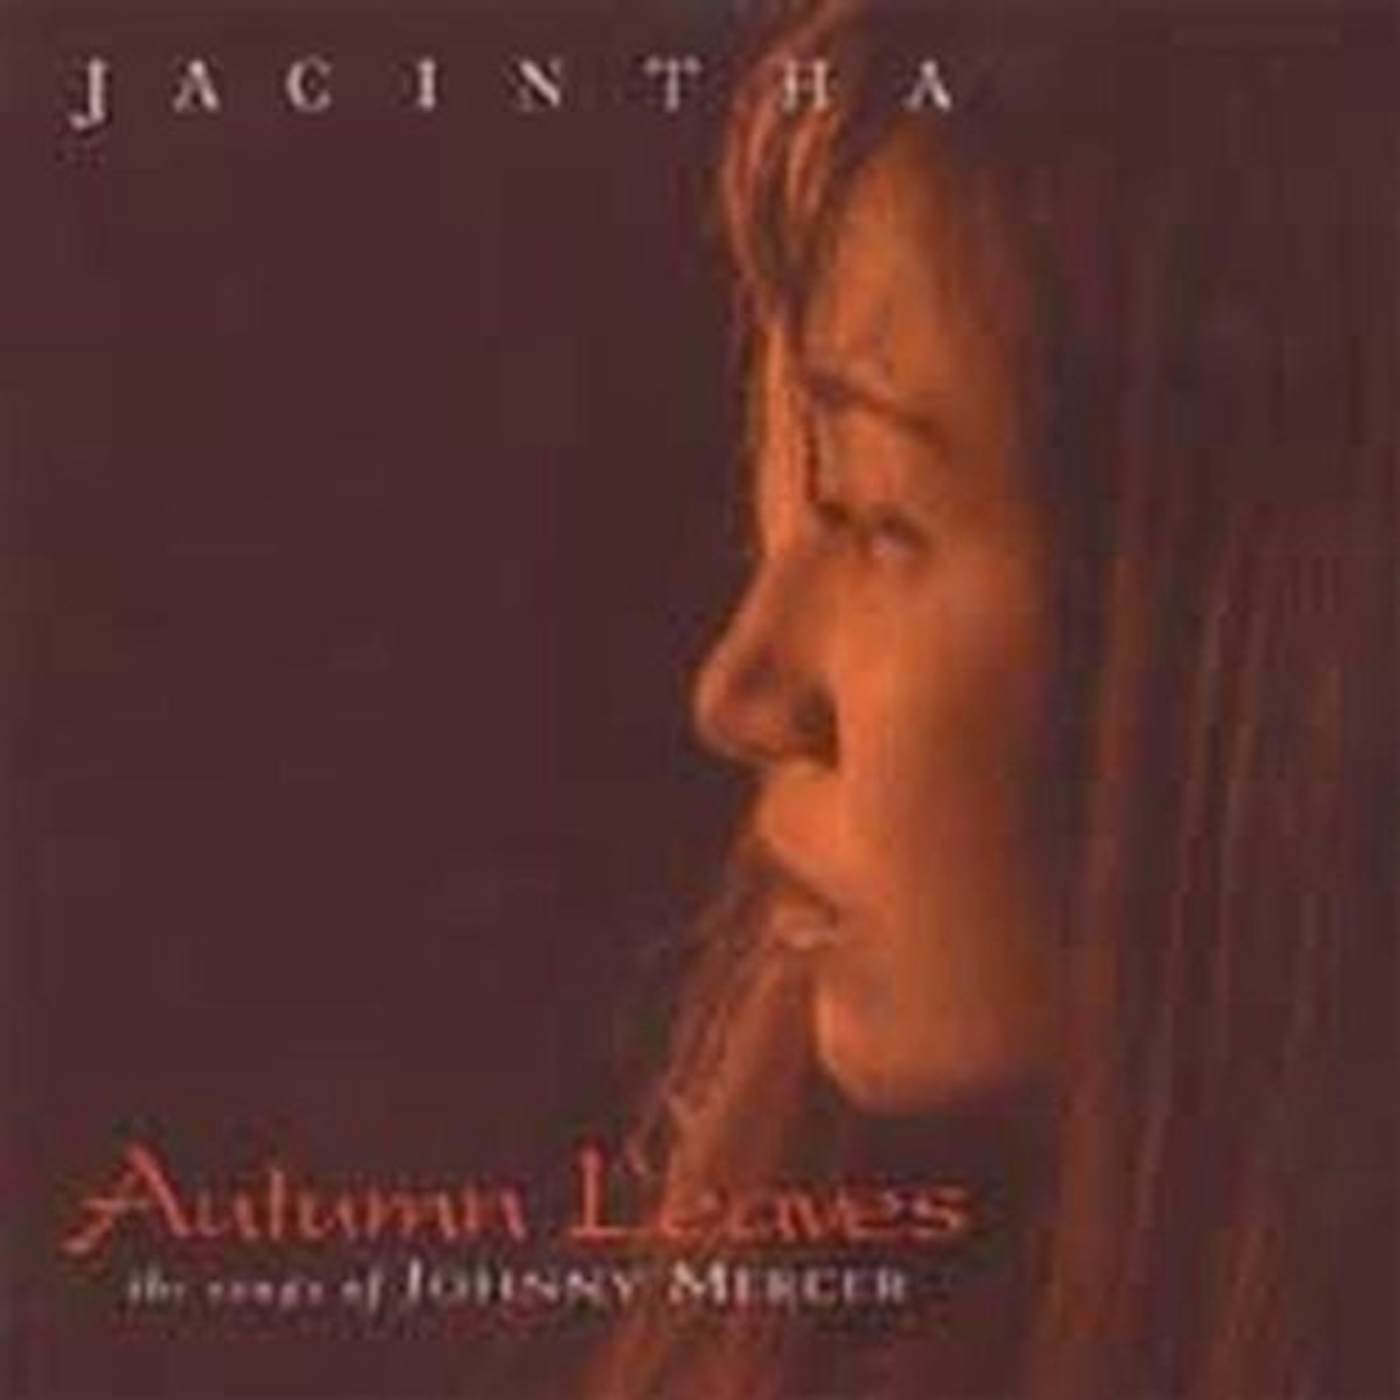 Jacintha AUTUMN LEAVES Vinyl Record